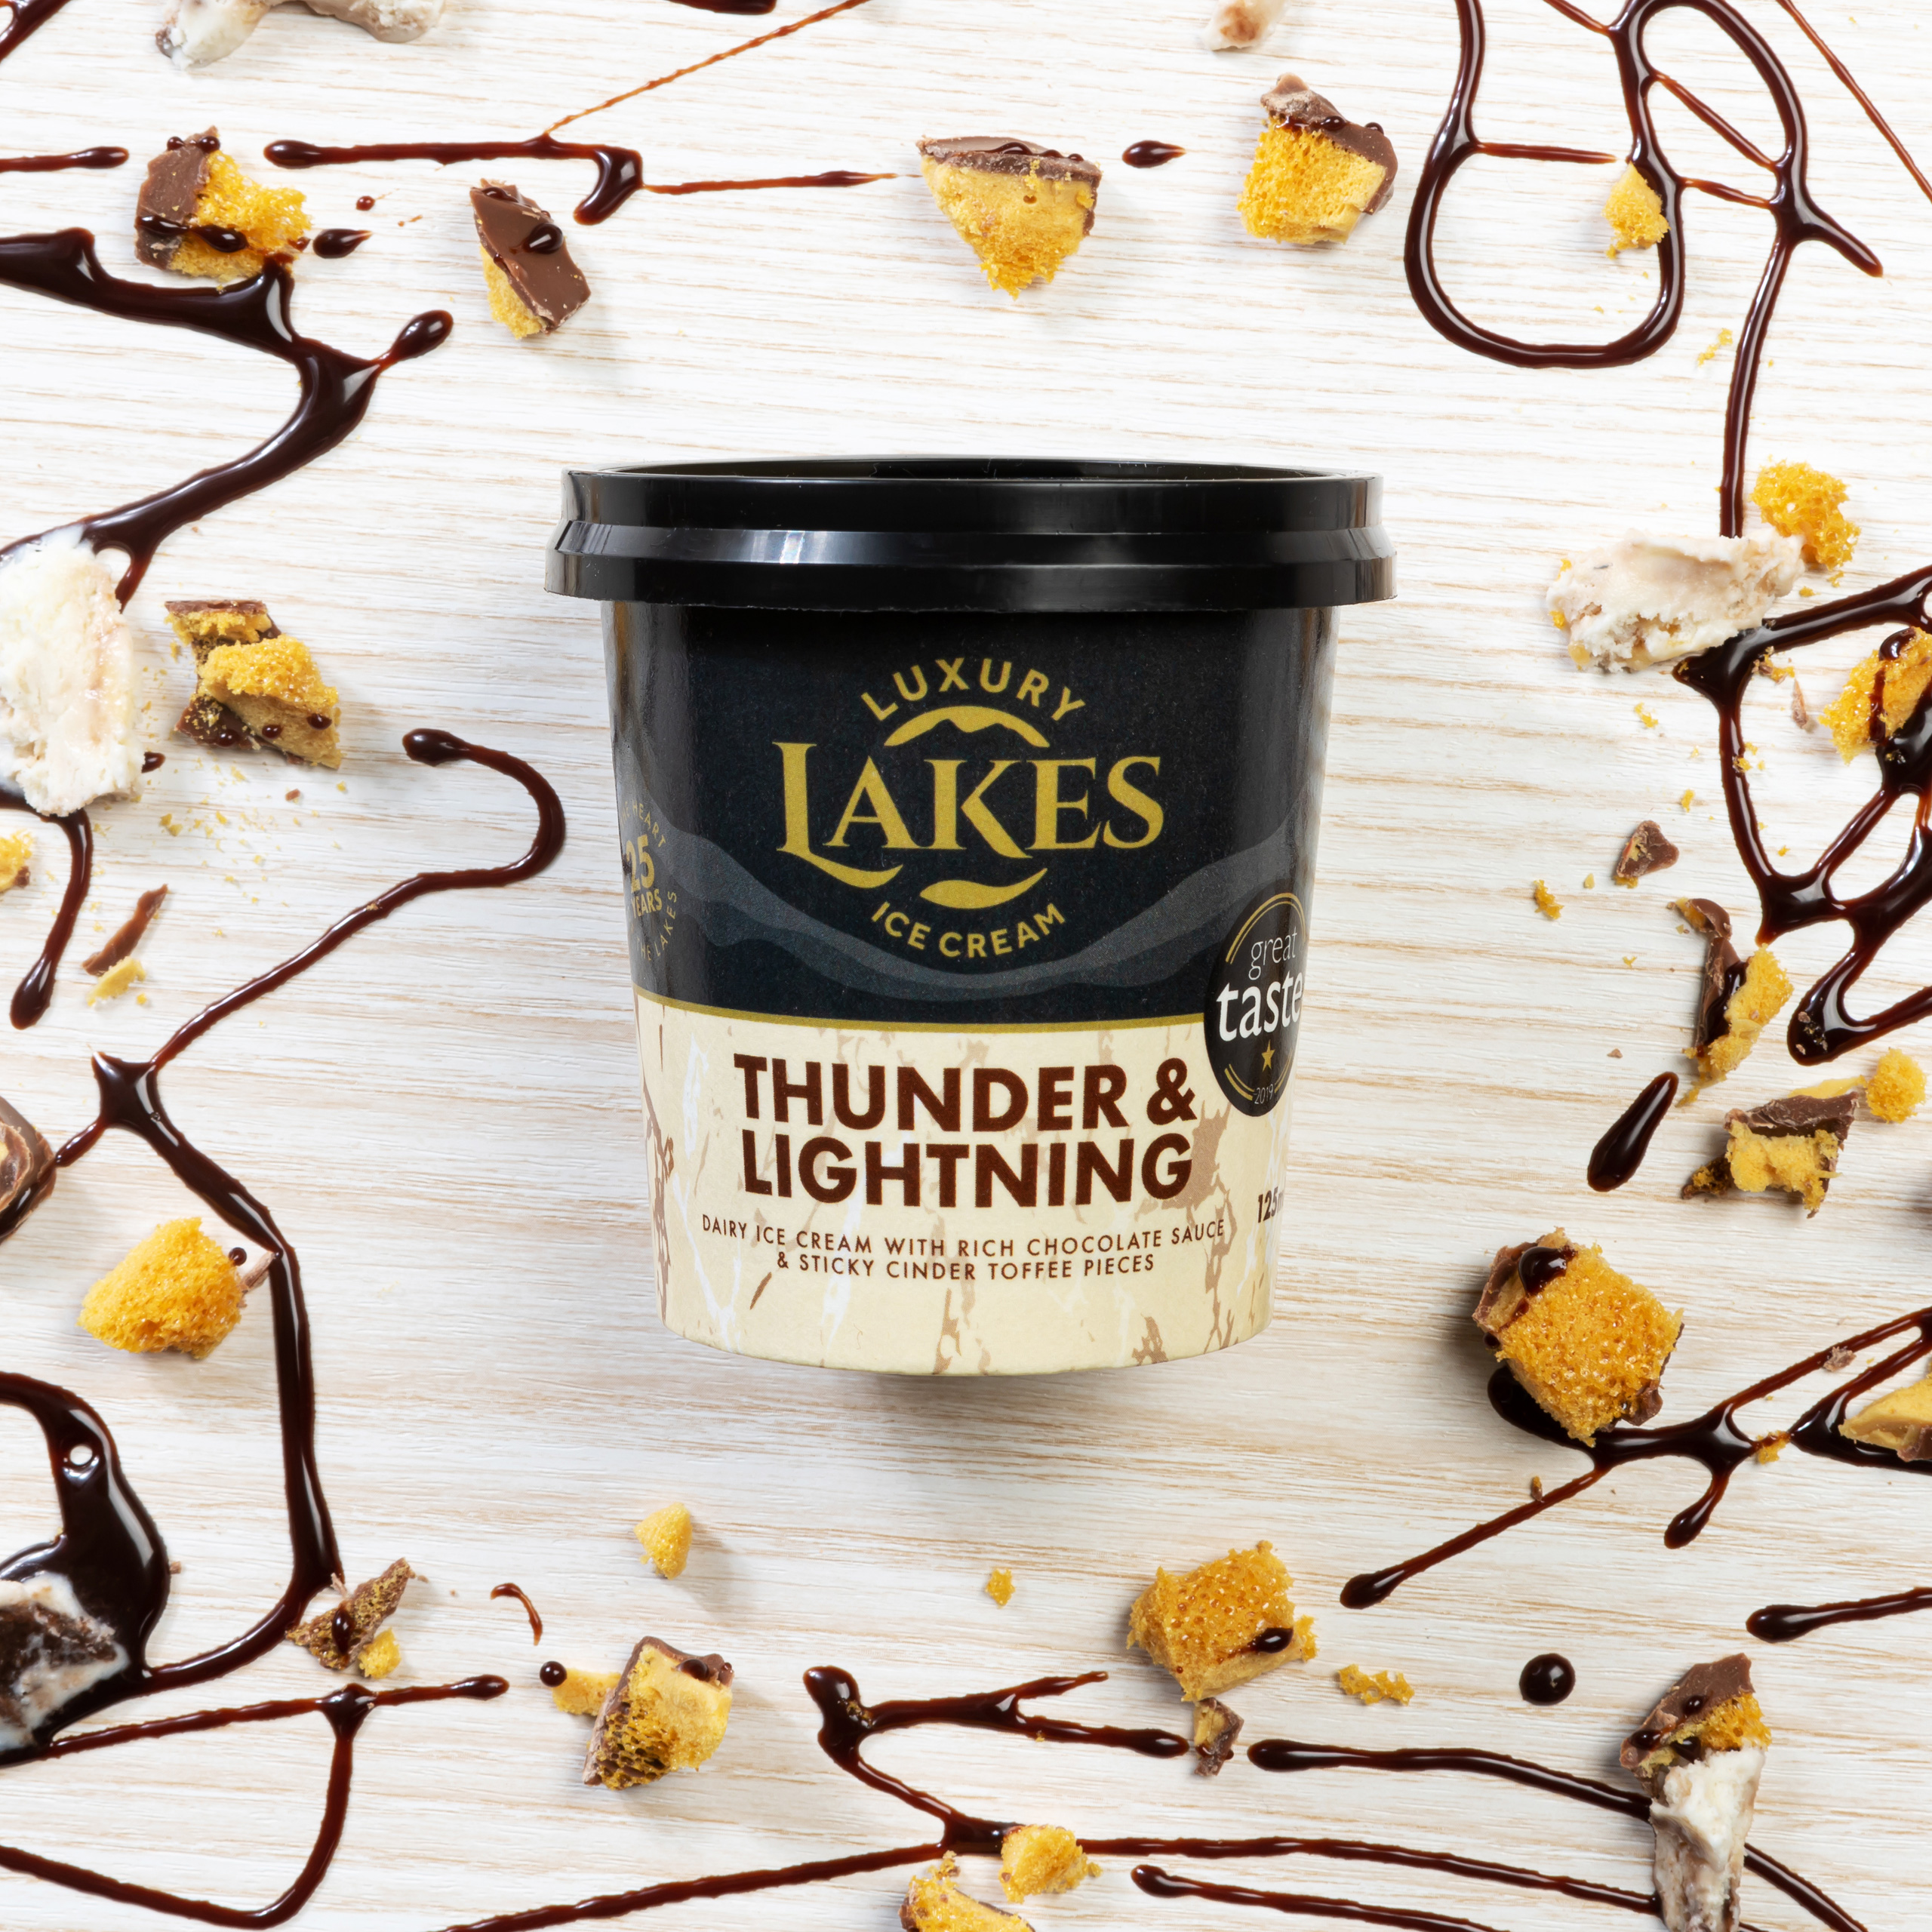 Thunder & Lightening ice cream tub